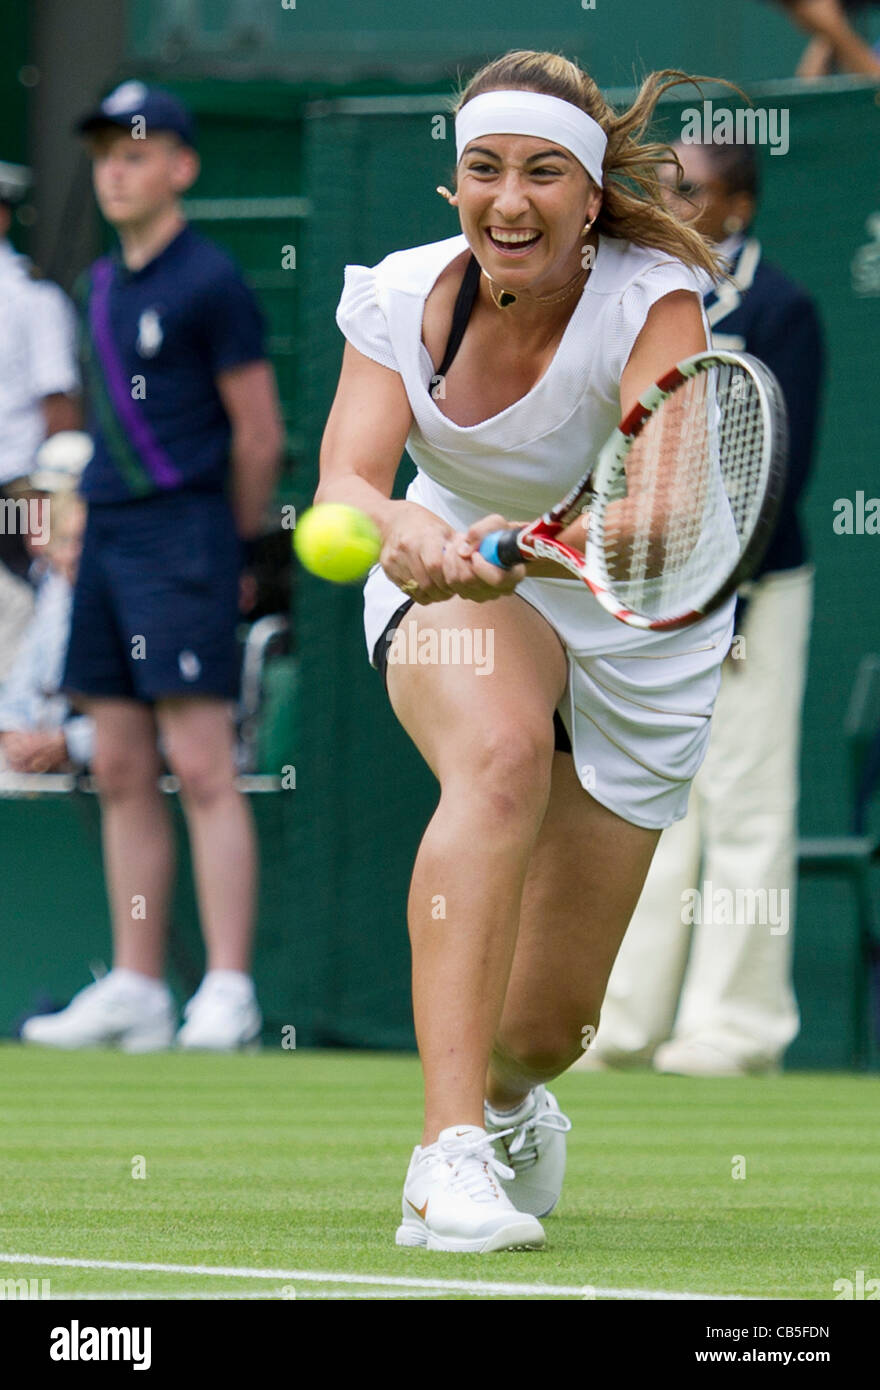 21.06.2011. Aravane Rezai FRA V Serena Williams USA (7). Aravane in Aktion. Das Tennisturnier von Wimbledon. Stockfoto